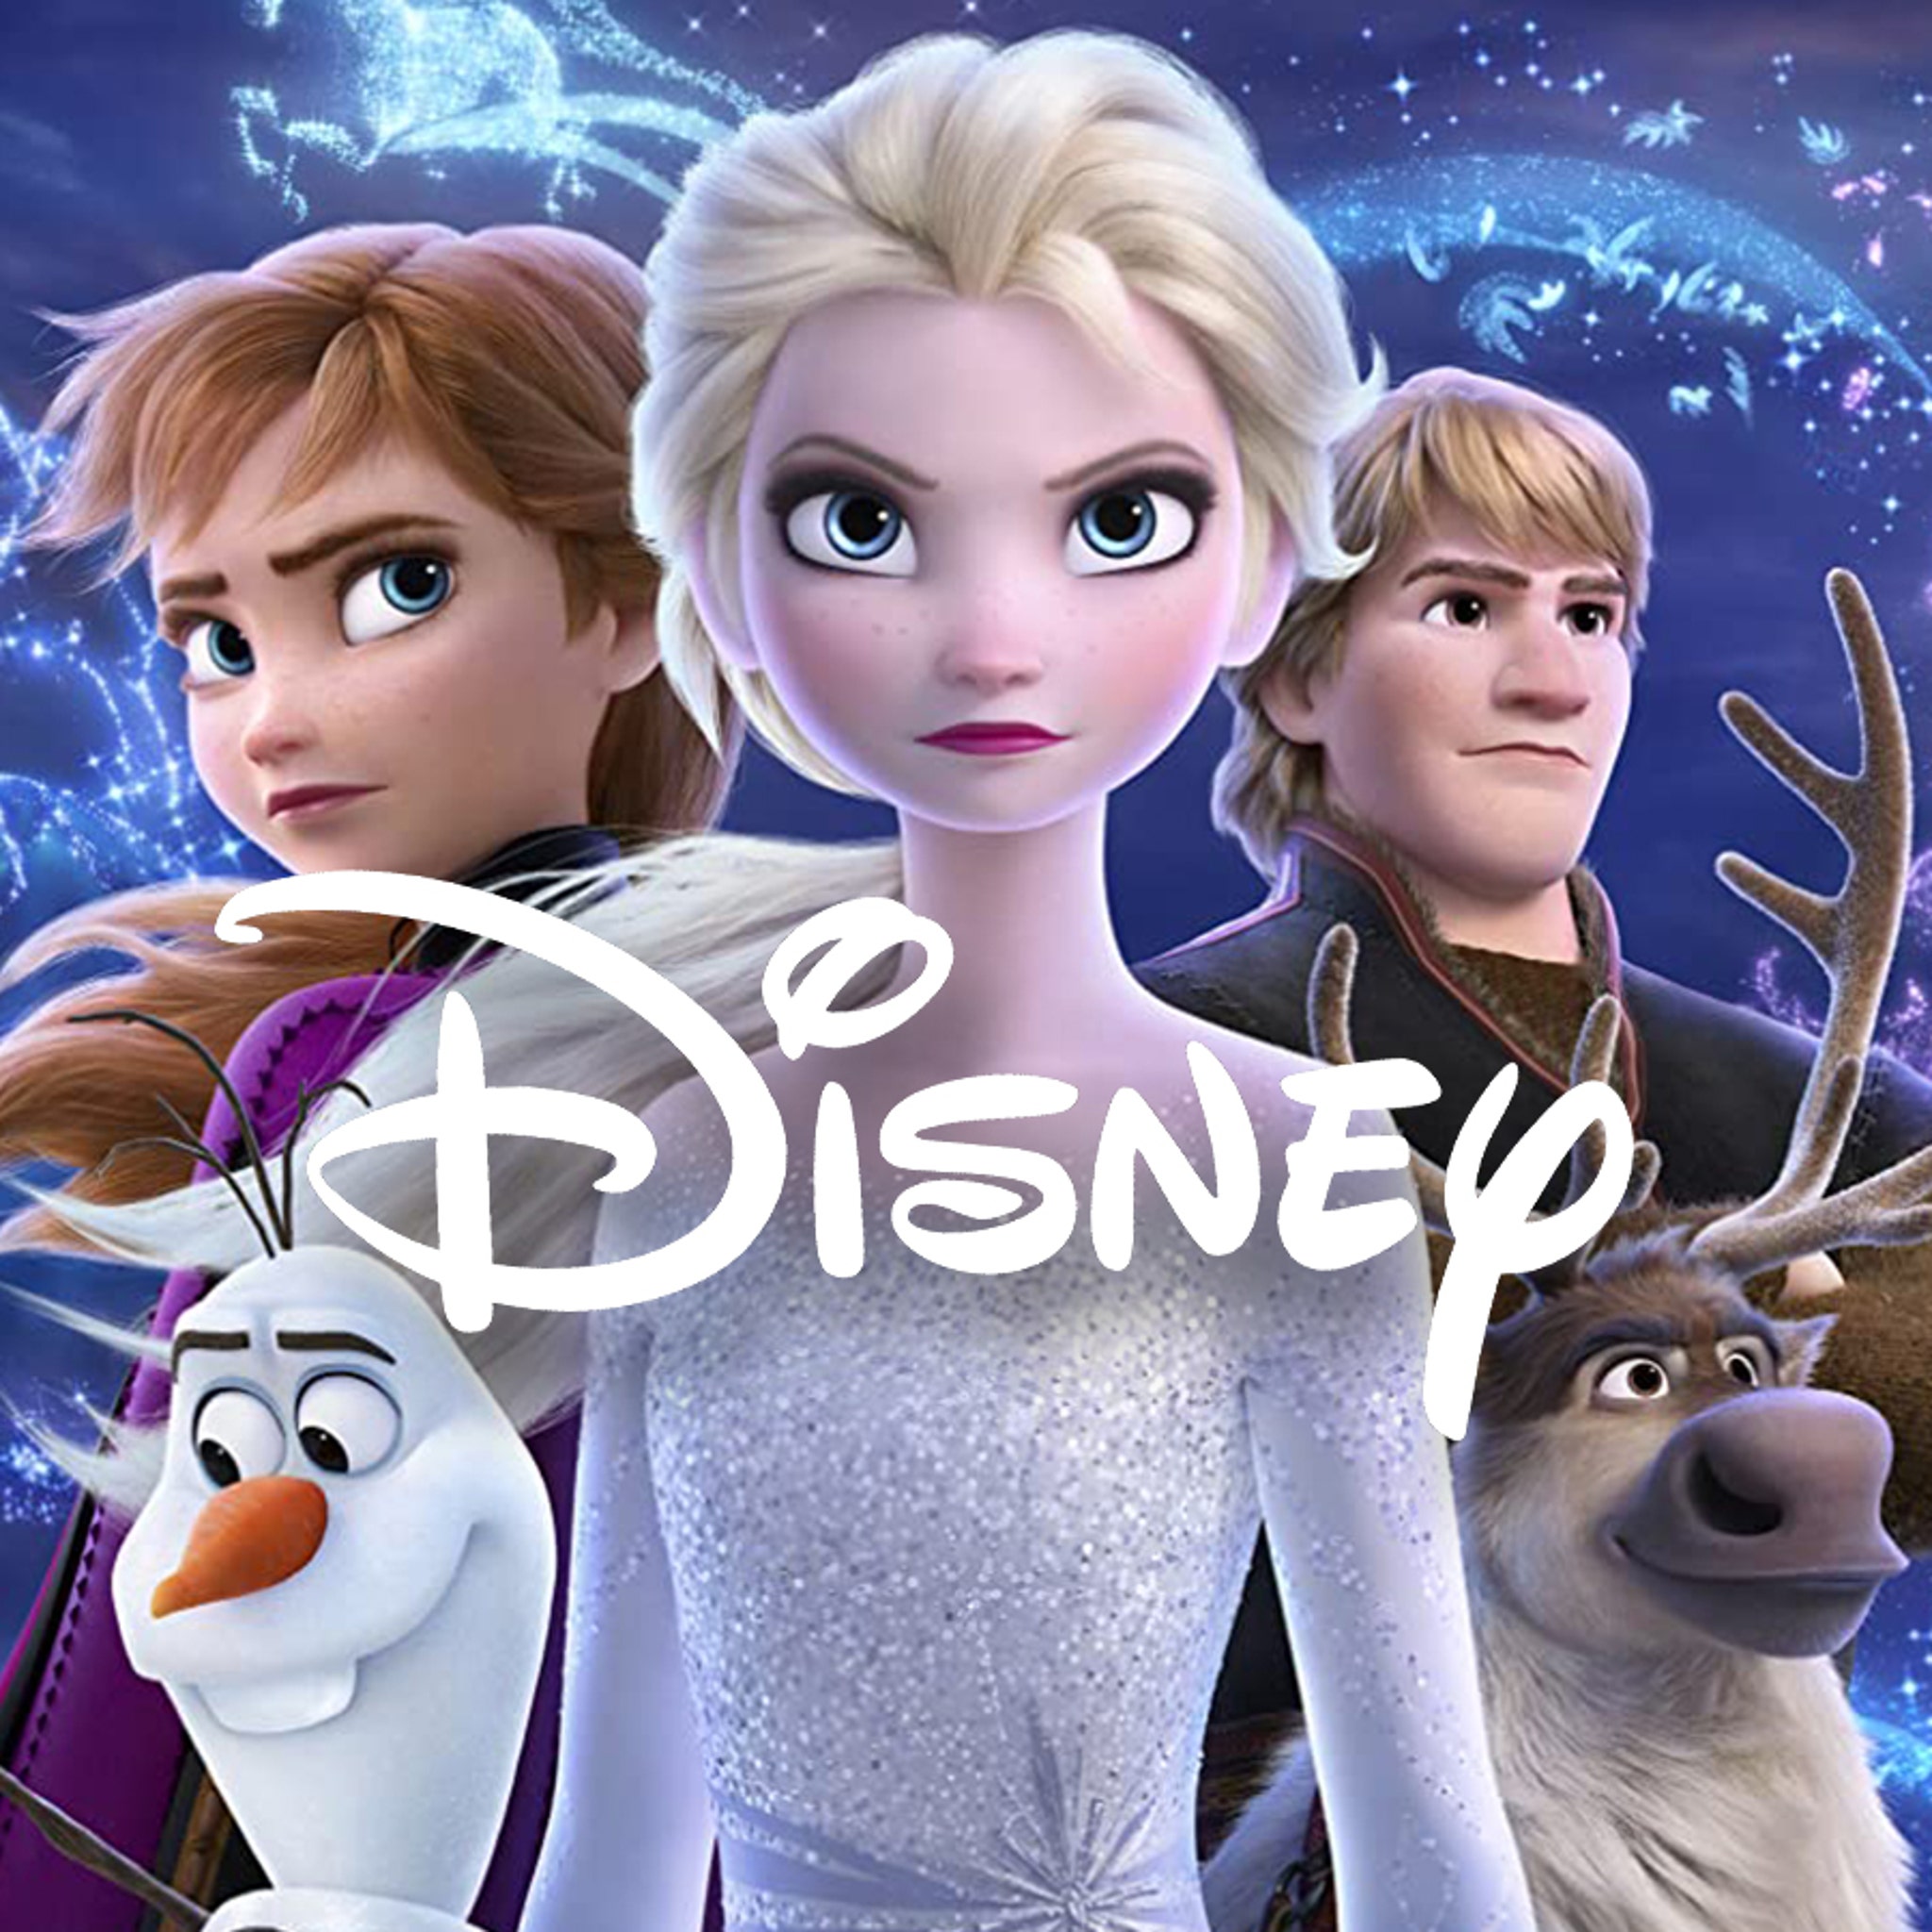 Disney Sued For Copyright Infringement Over 'Frozen 2' Song